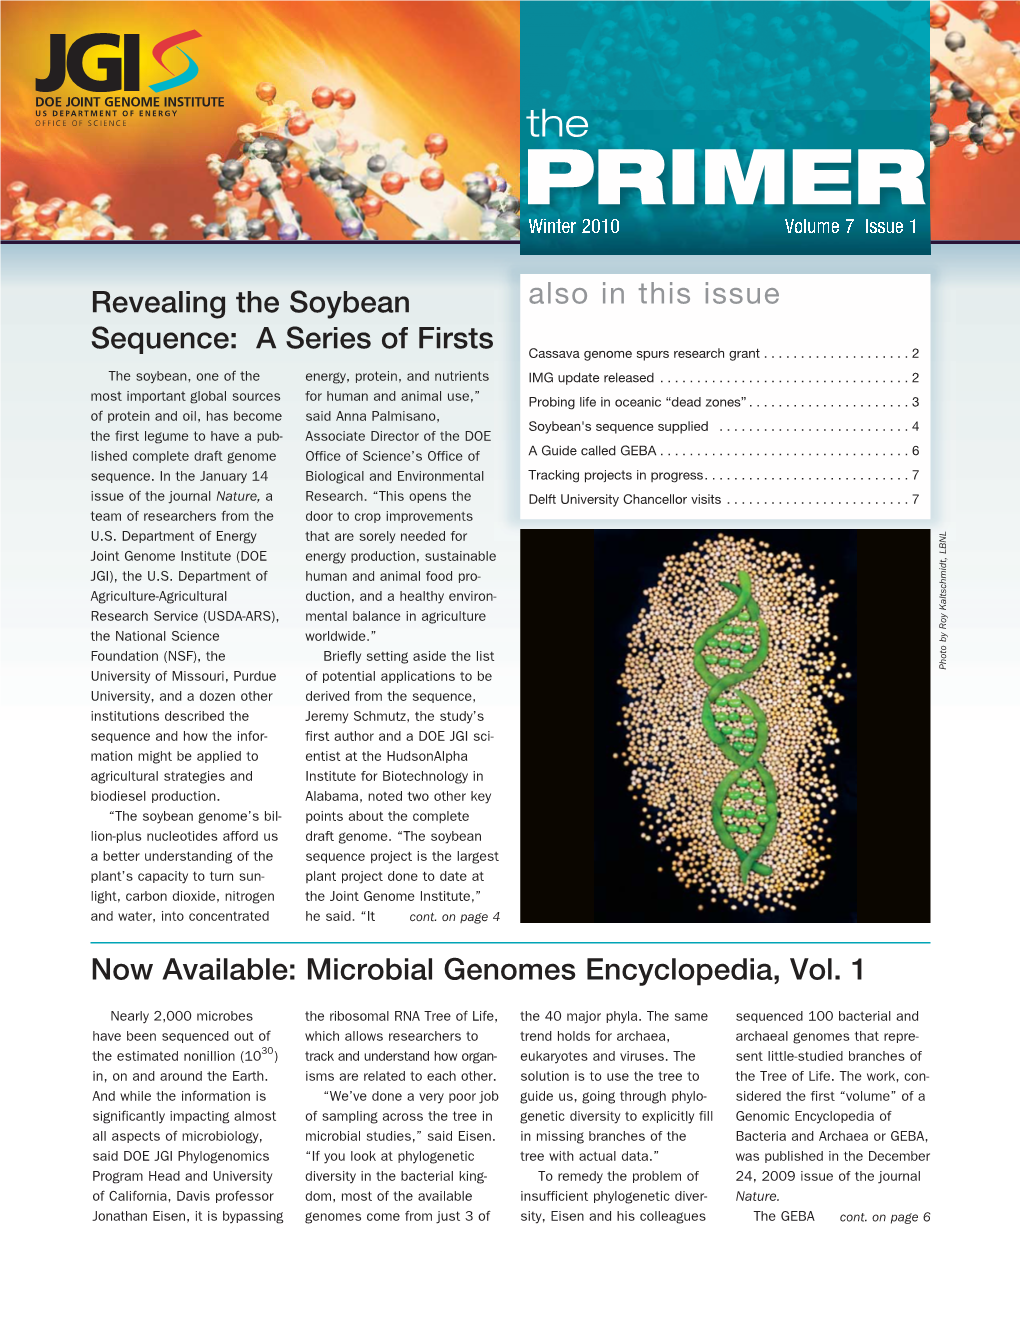 PRIMER Winter 2010 Volume 7 Issue 1